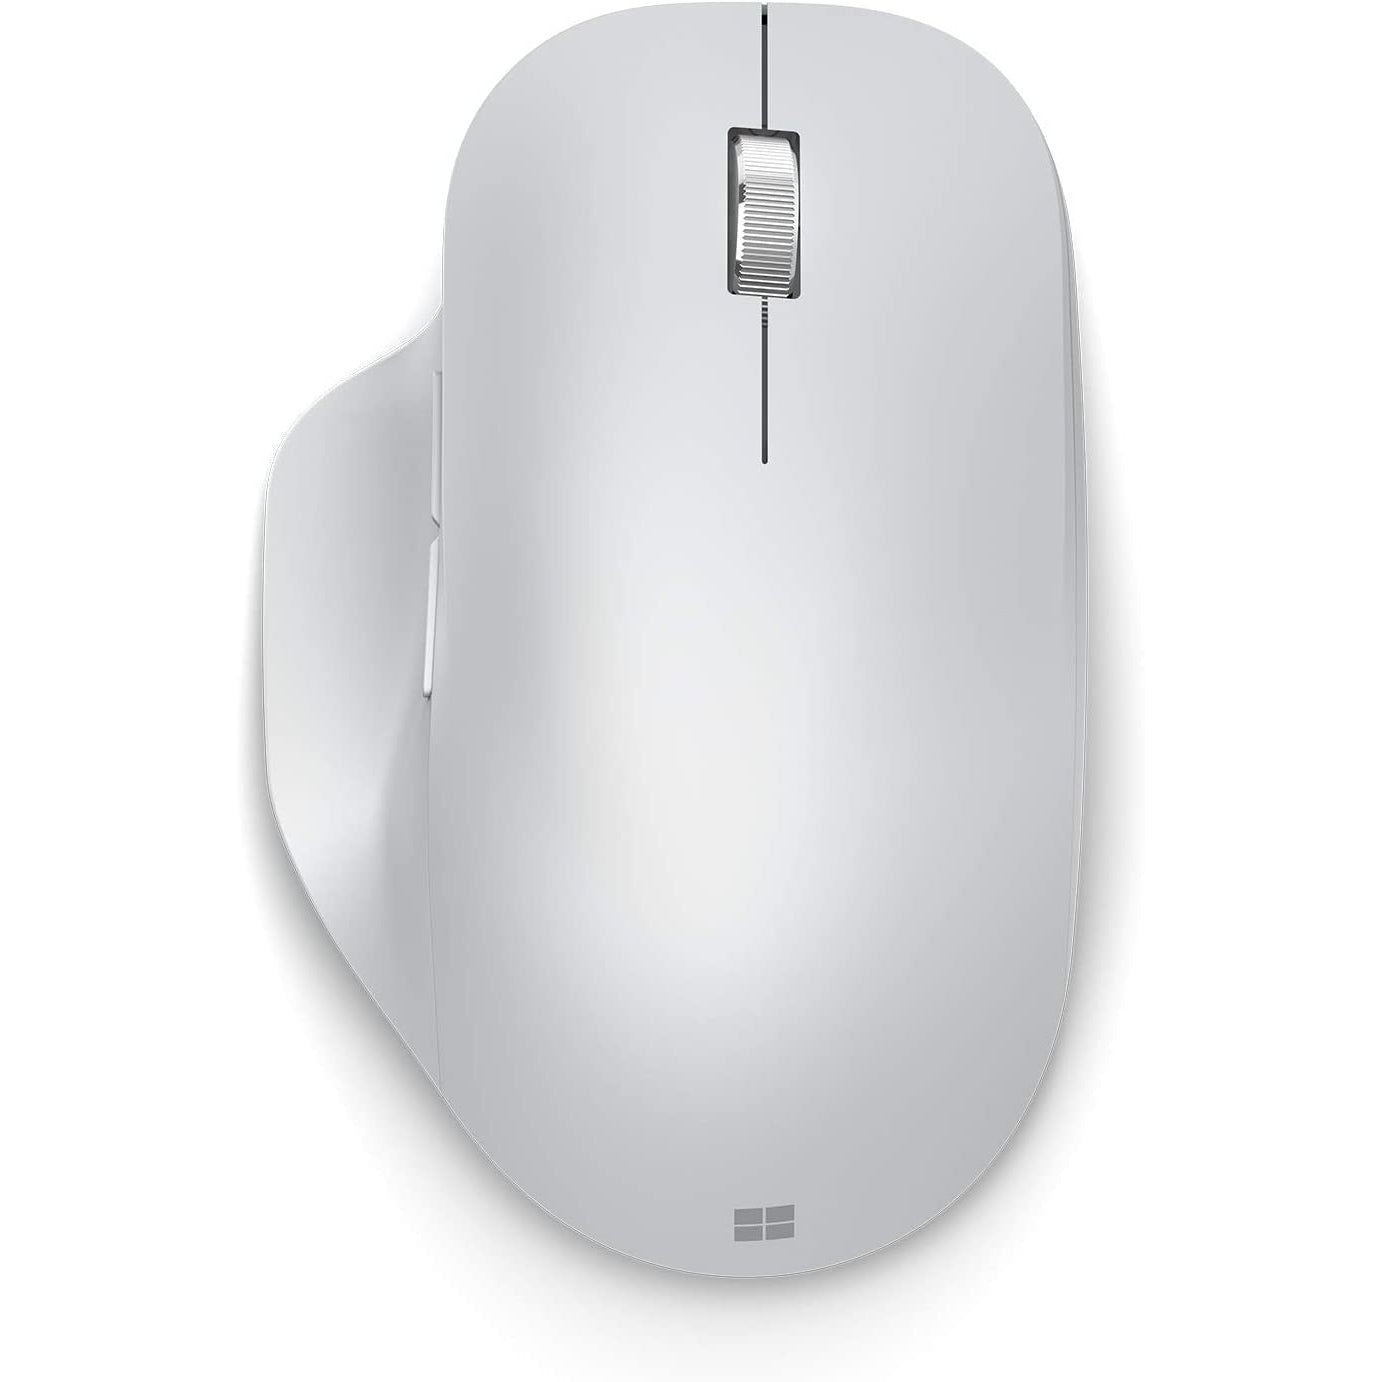 Microsoft 222-00020 Bluetooth Ergonomic Mouse - White - Excellent